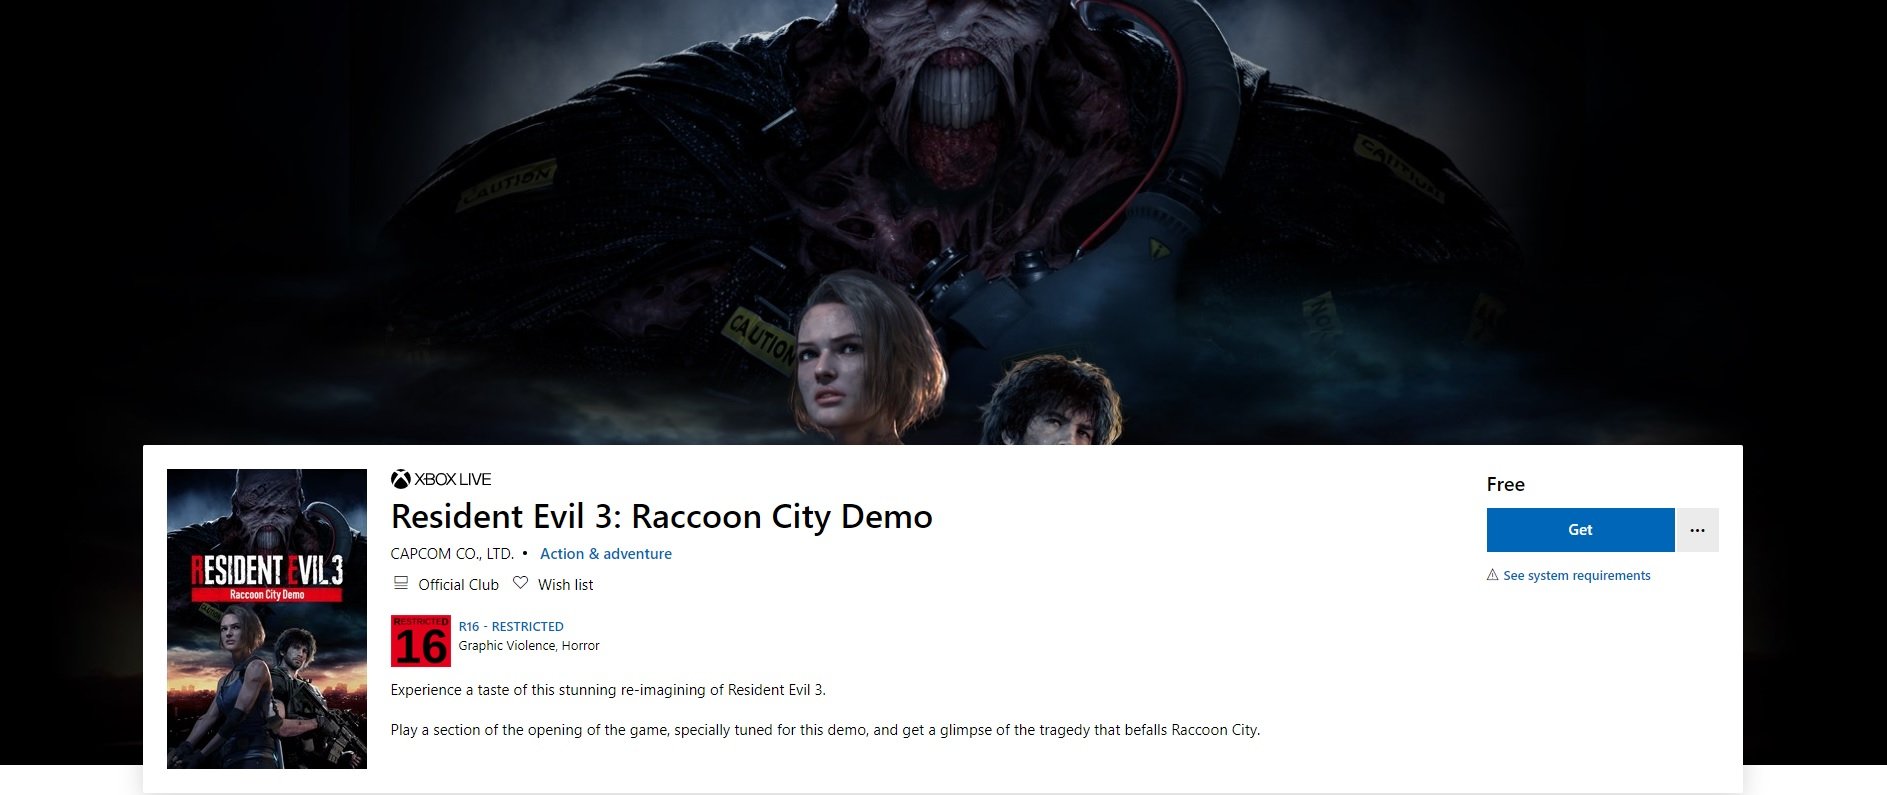 resident evil 3 remake release date